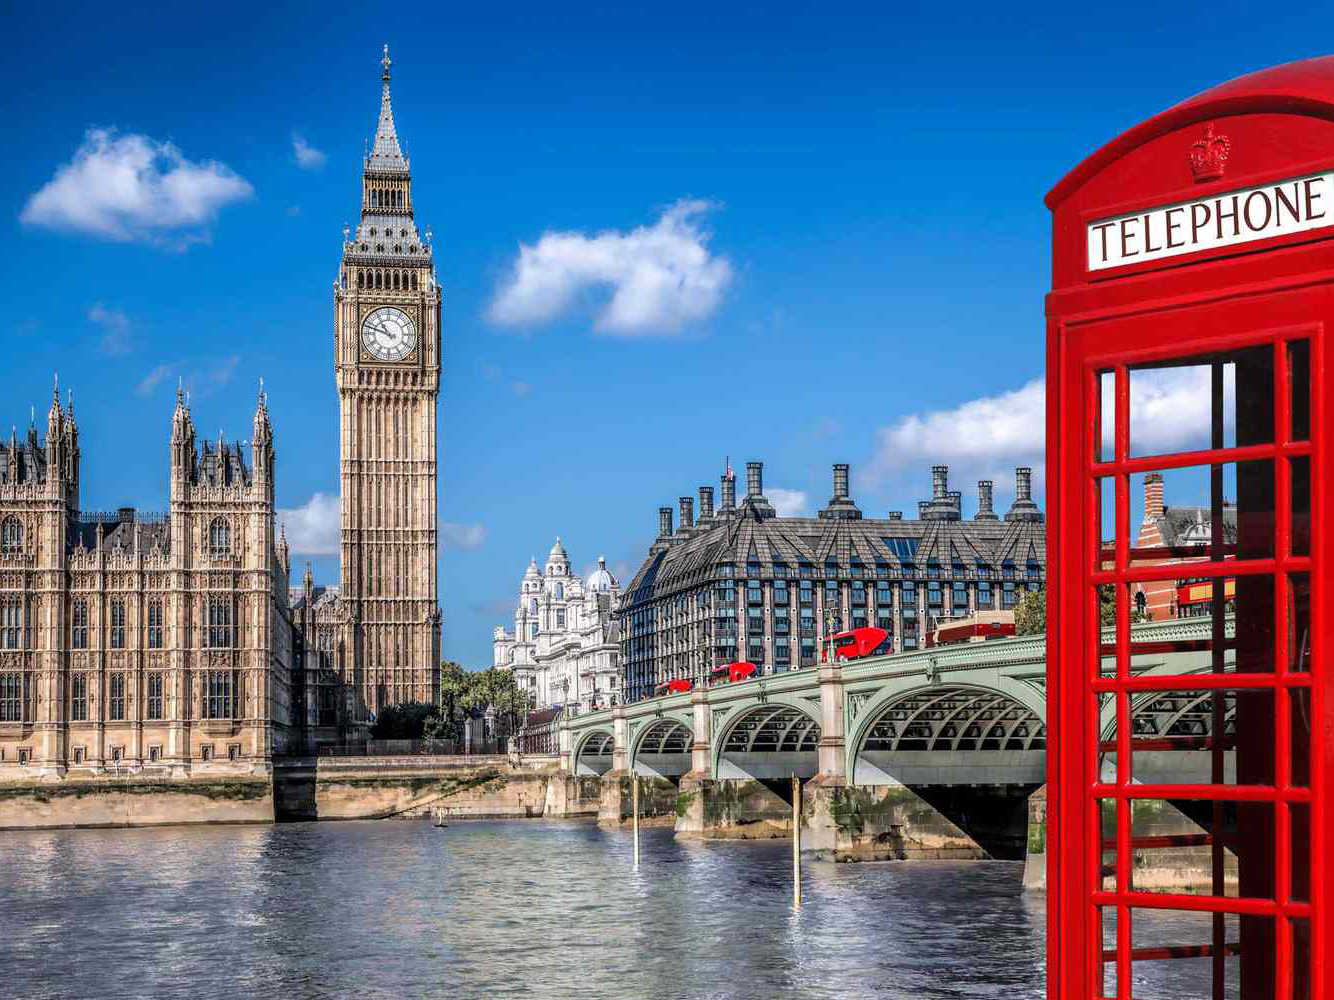 Best Destination for first Europe Trip - London, UK